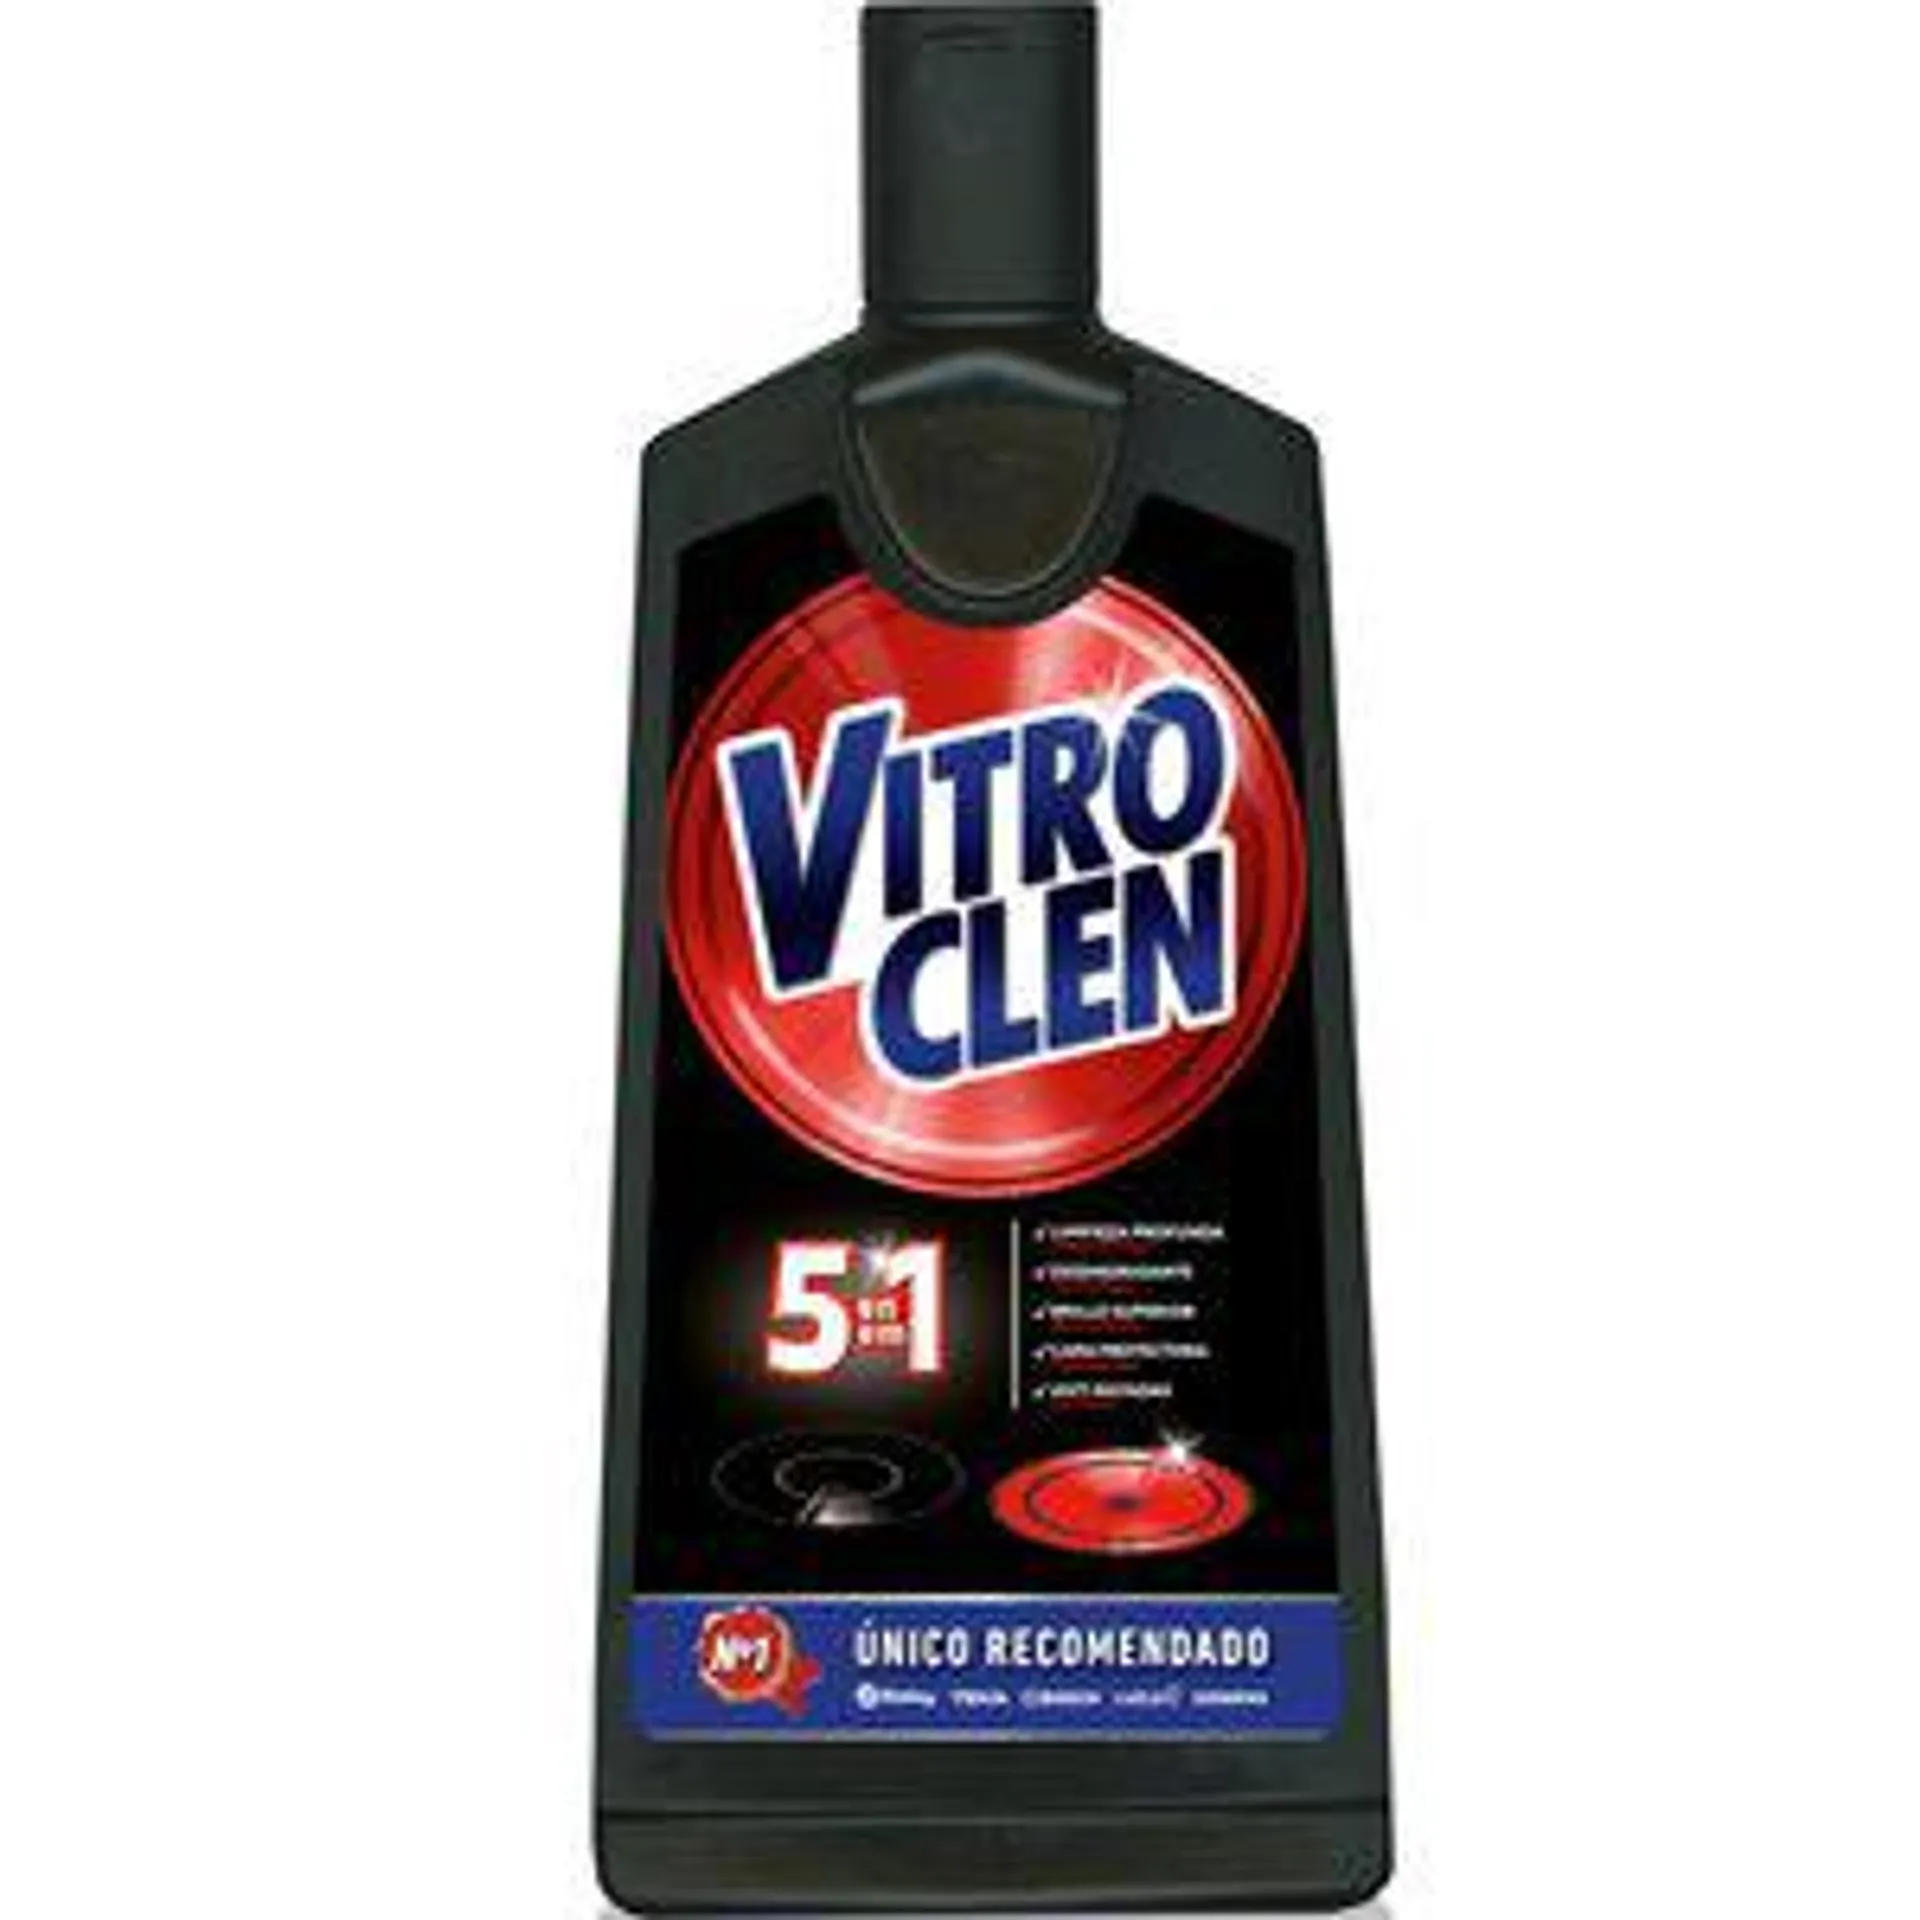 VITROCLEN limpiador vitrocerámica crema botella 200 ml